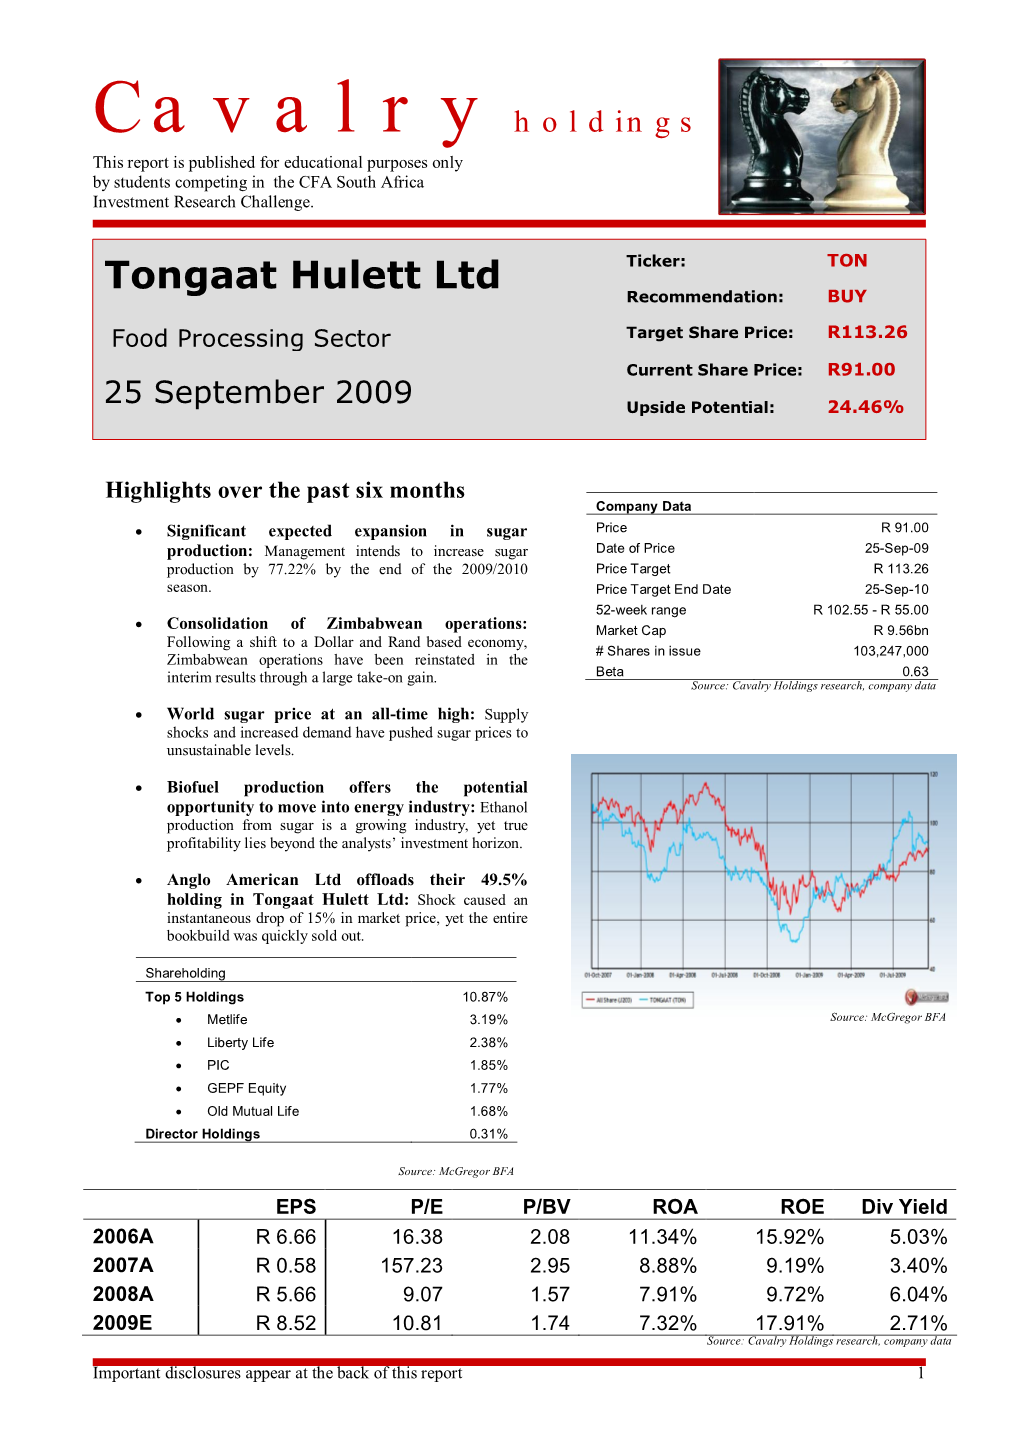 Tongaat Hulett Ltd Recommendation: BUY